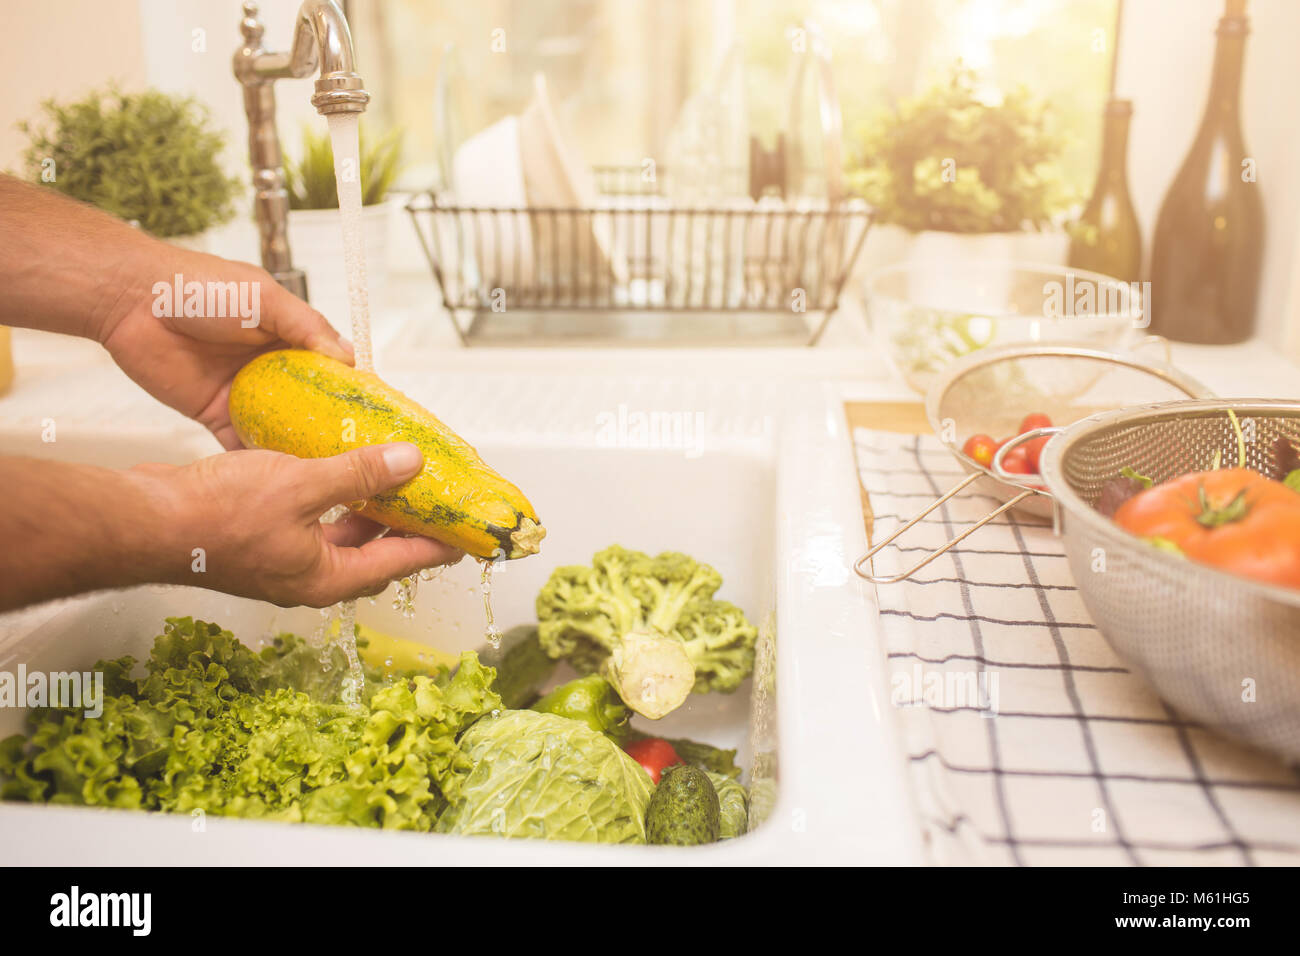 Man washing vegetables before eating Stock Photo